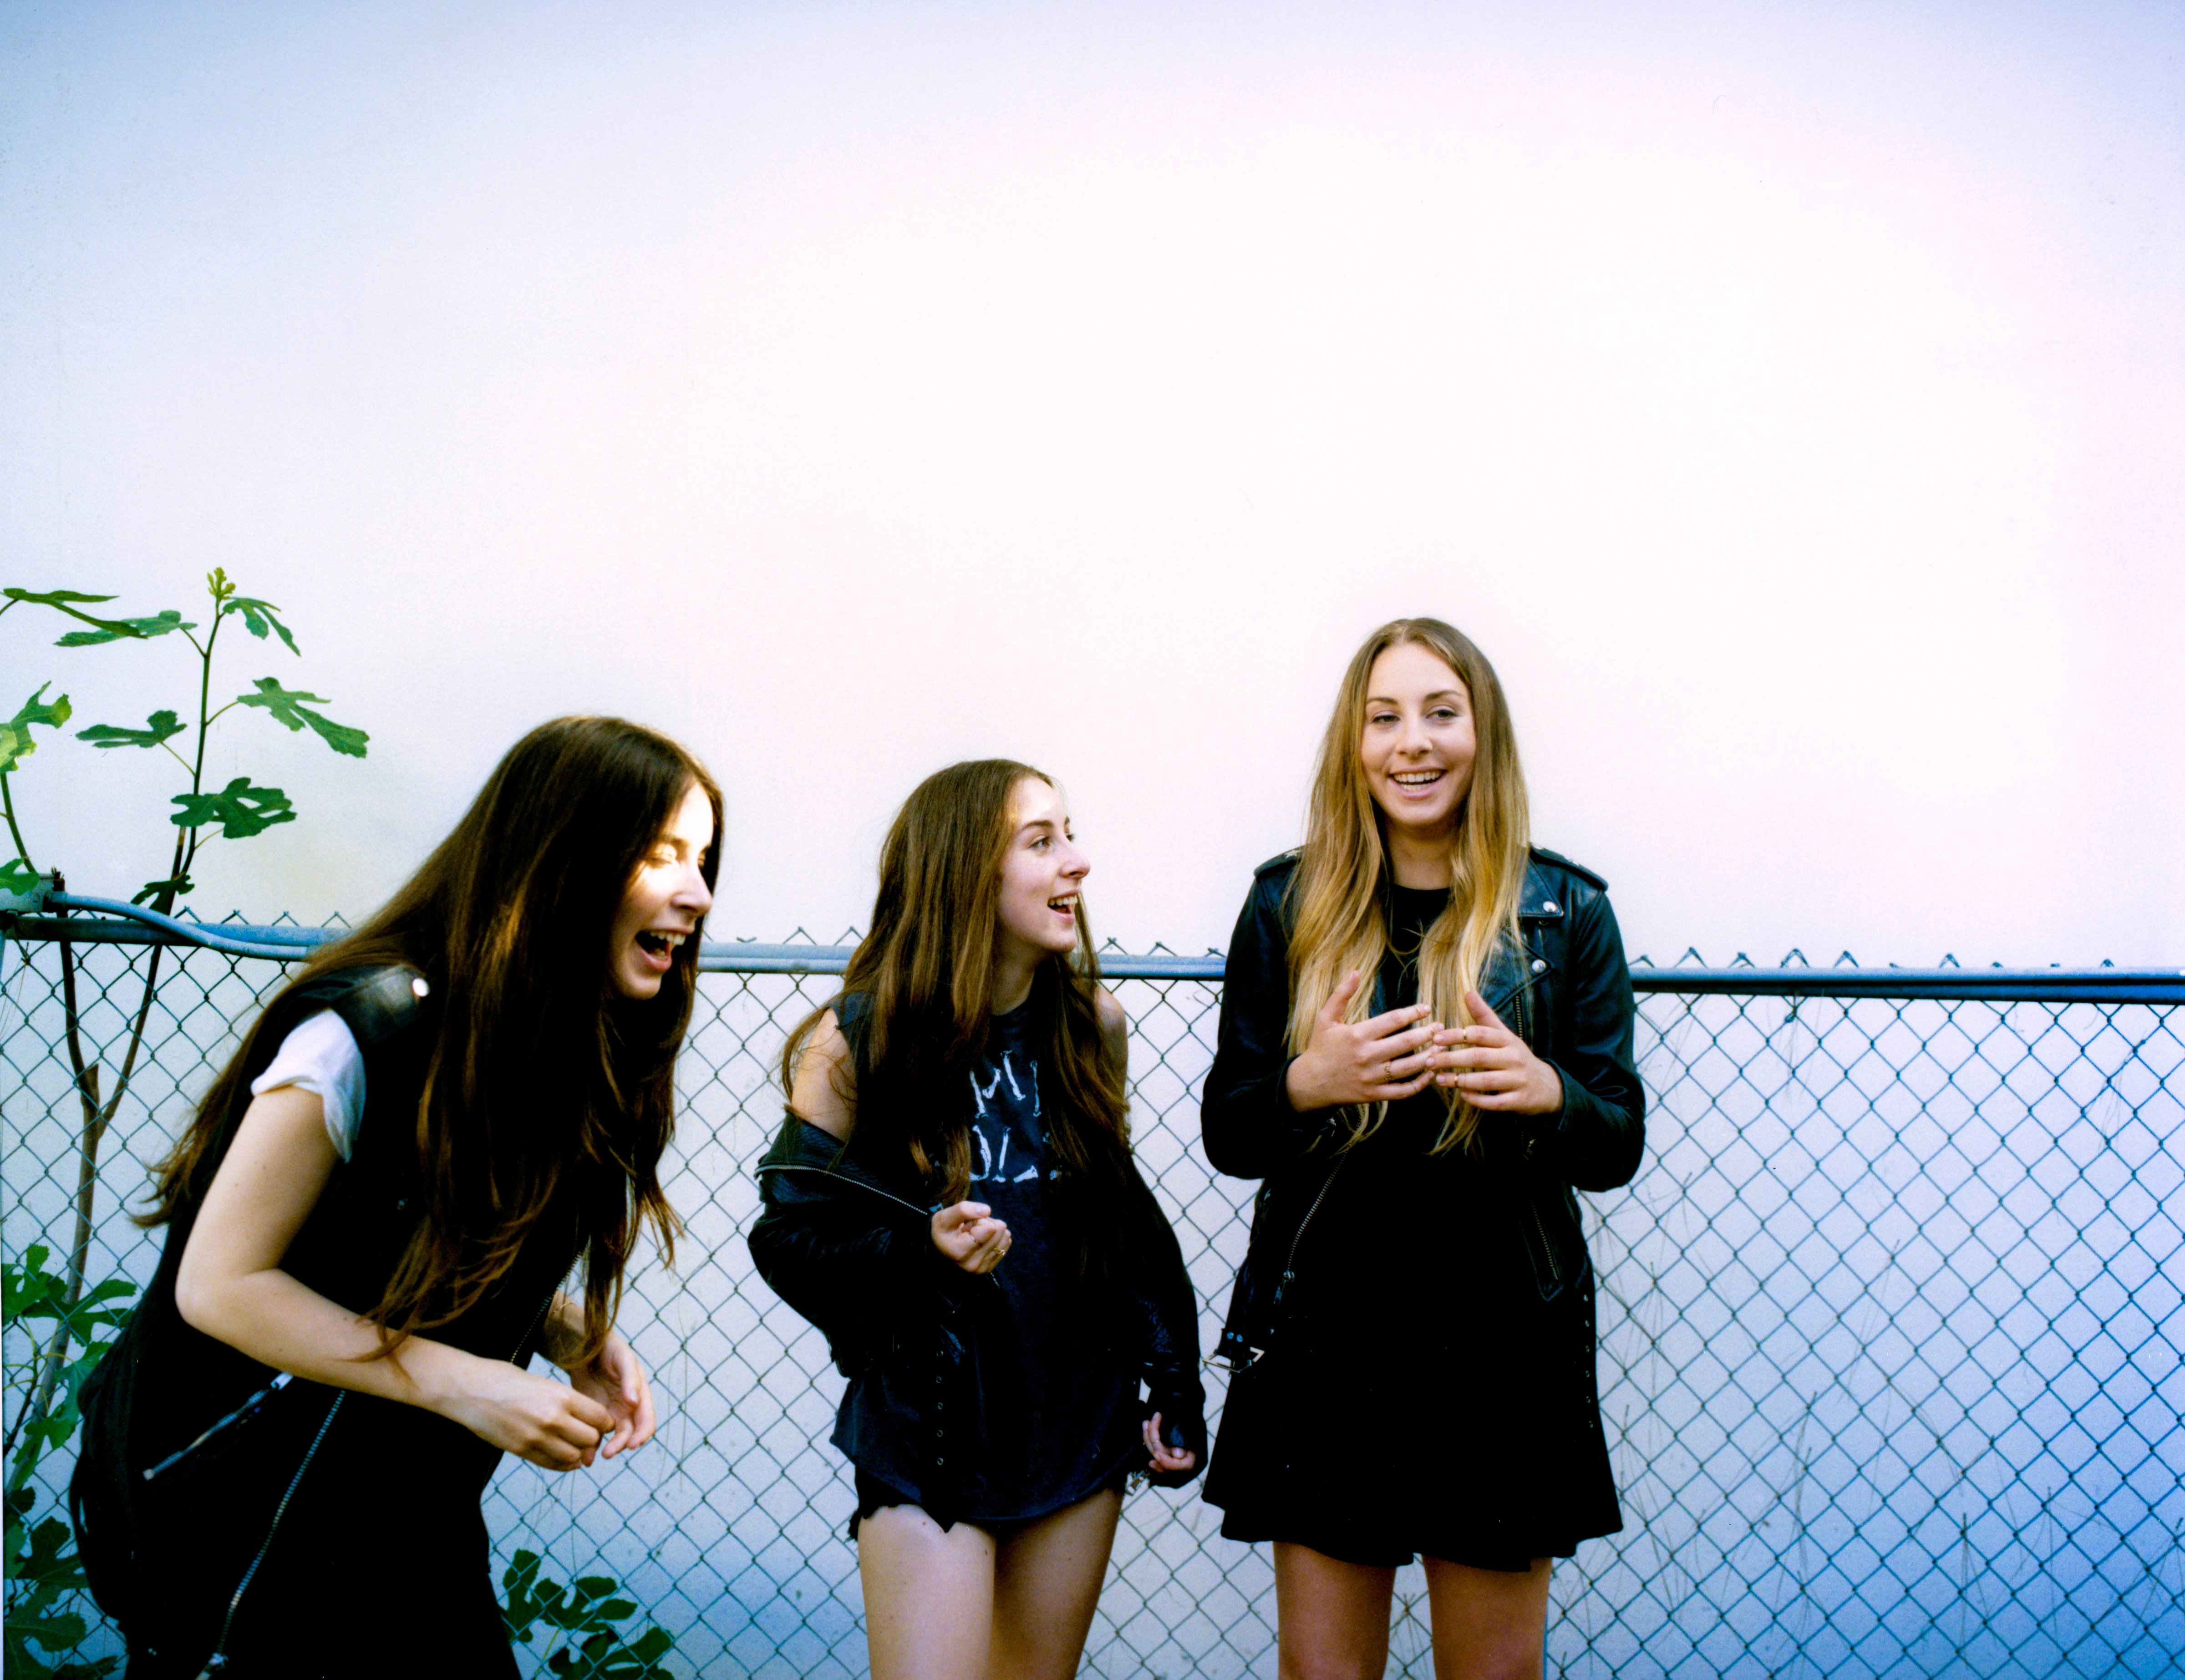 From left to right: Danielle, Alana and Este Haim. (Tom Beard)